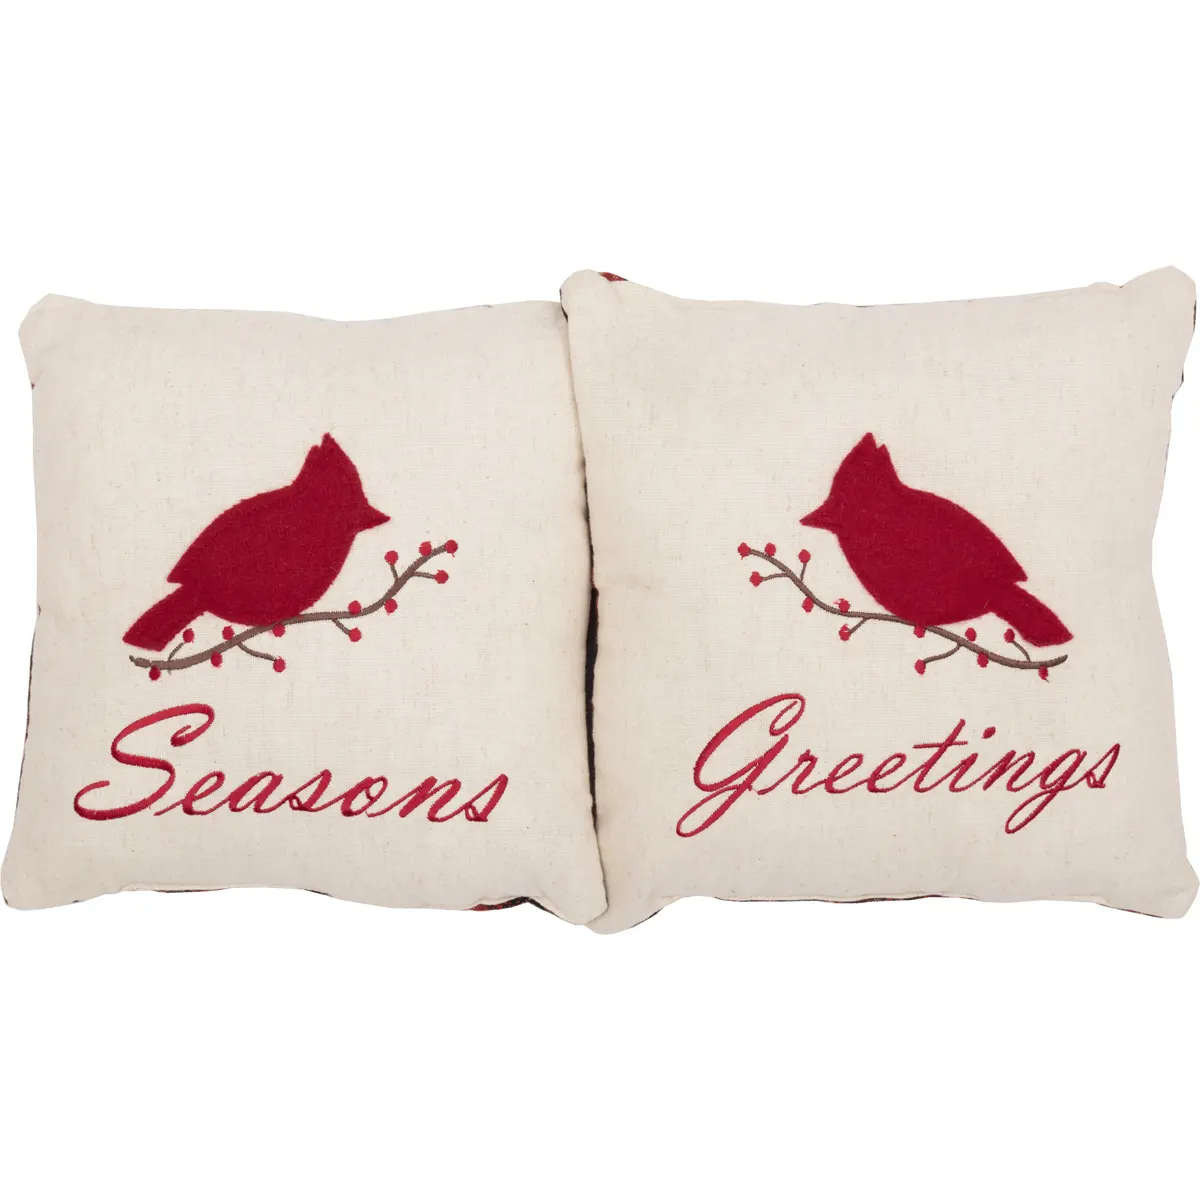 Seasons Greetings Pillow Set of 2 10x10